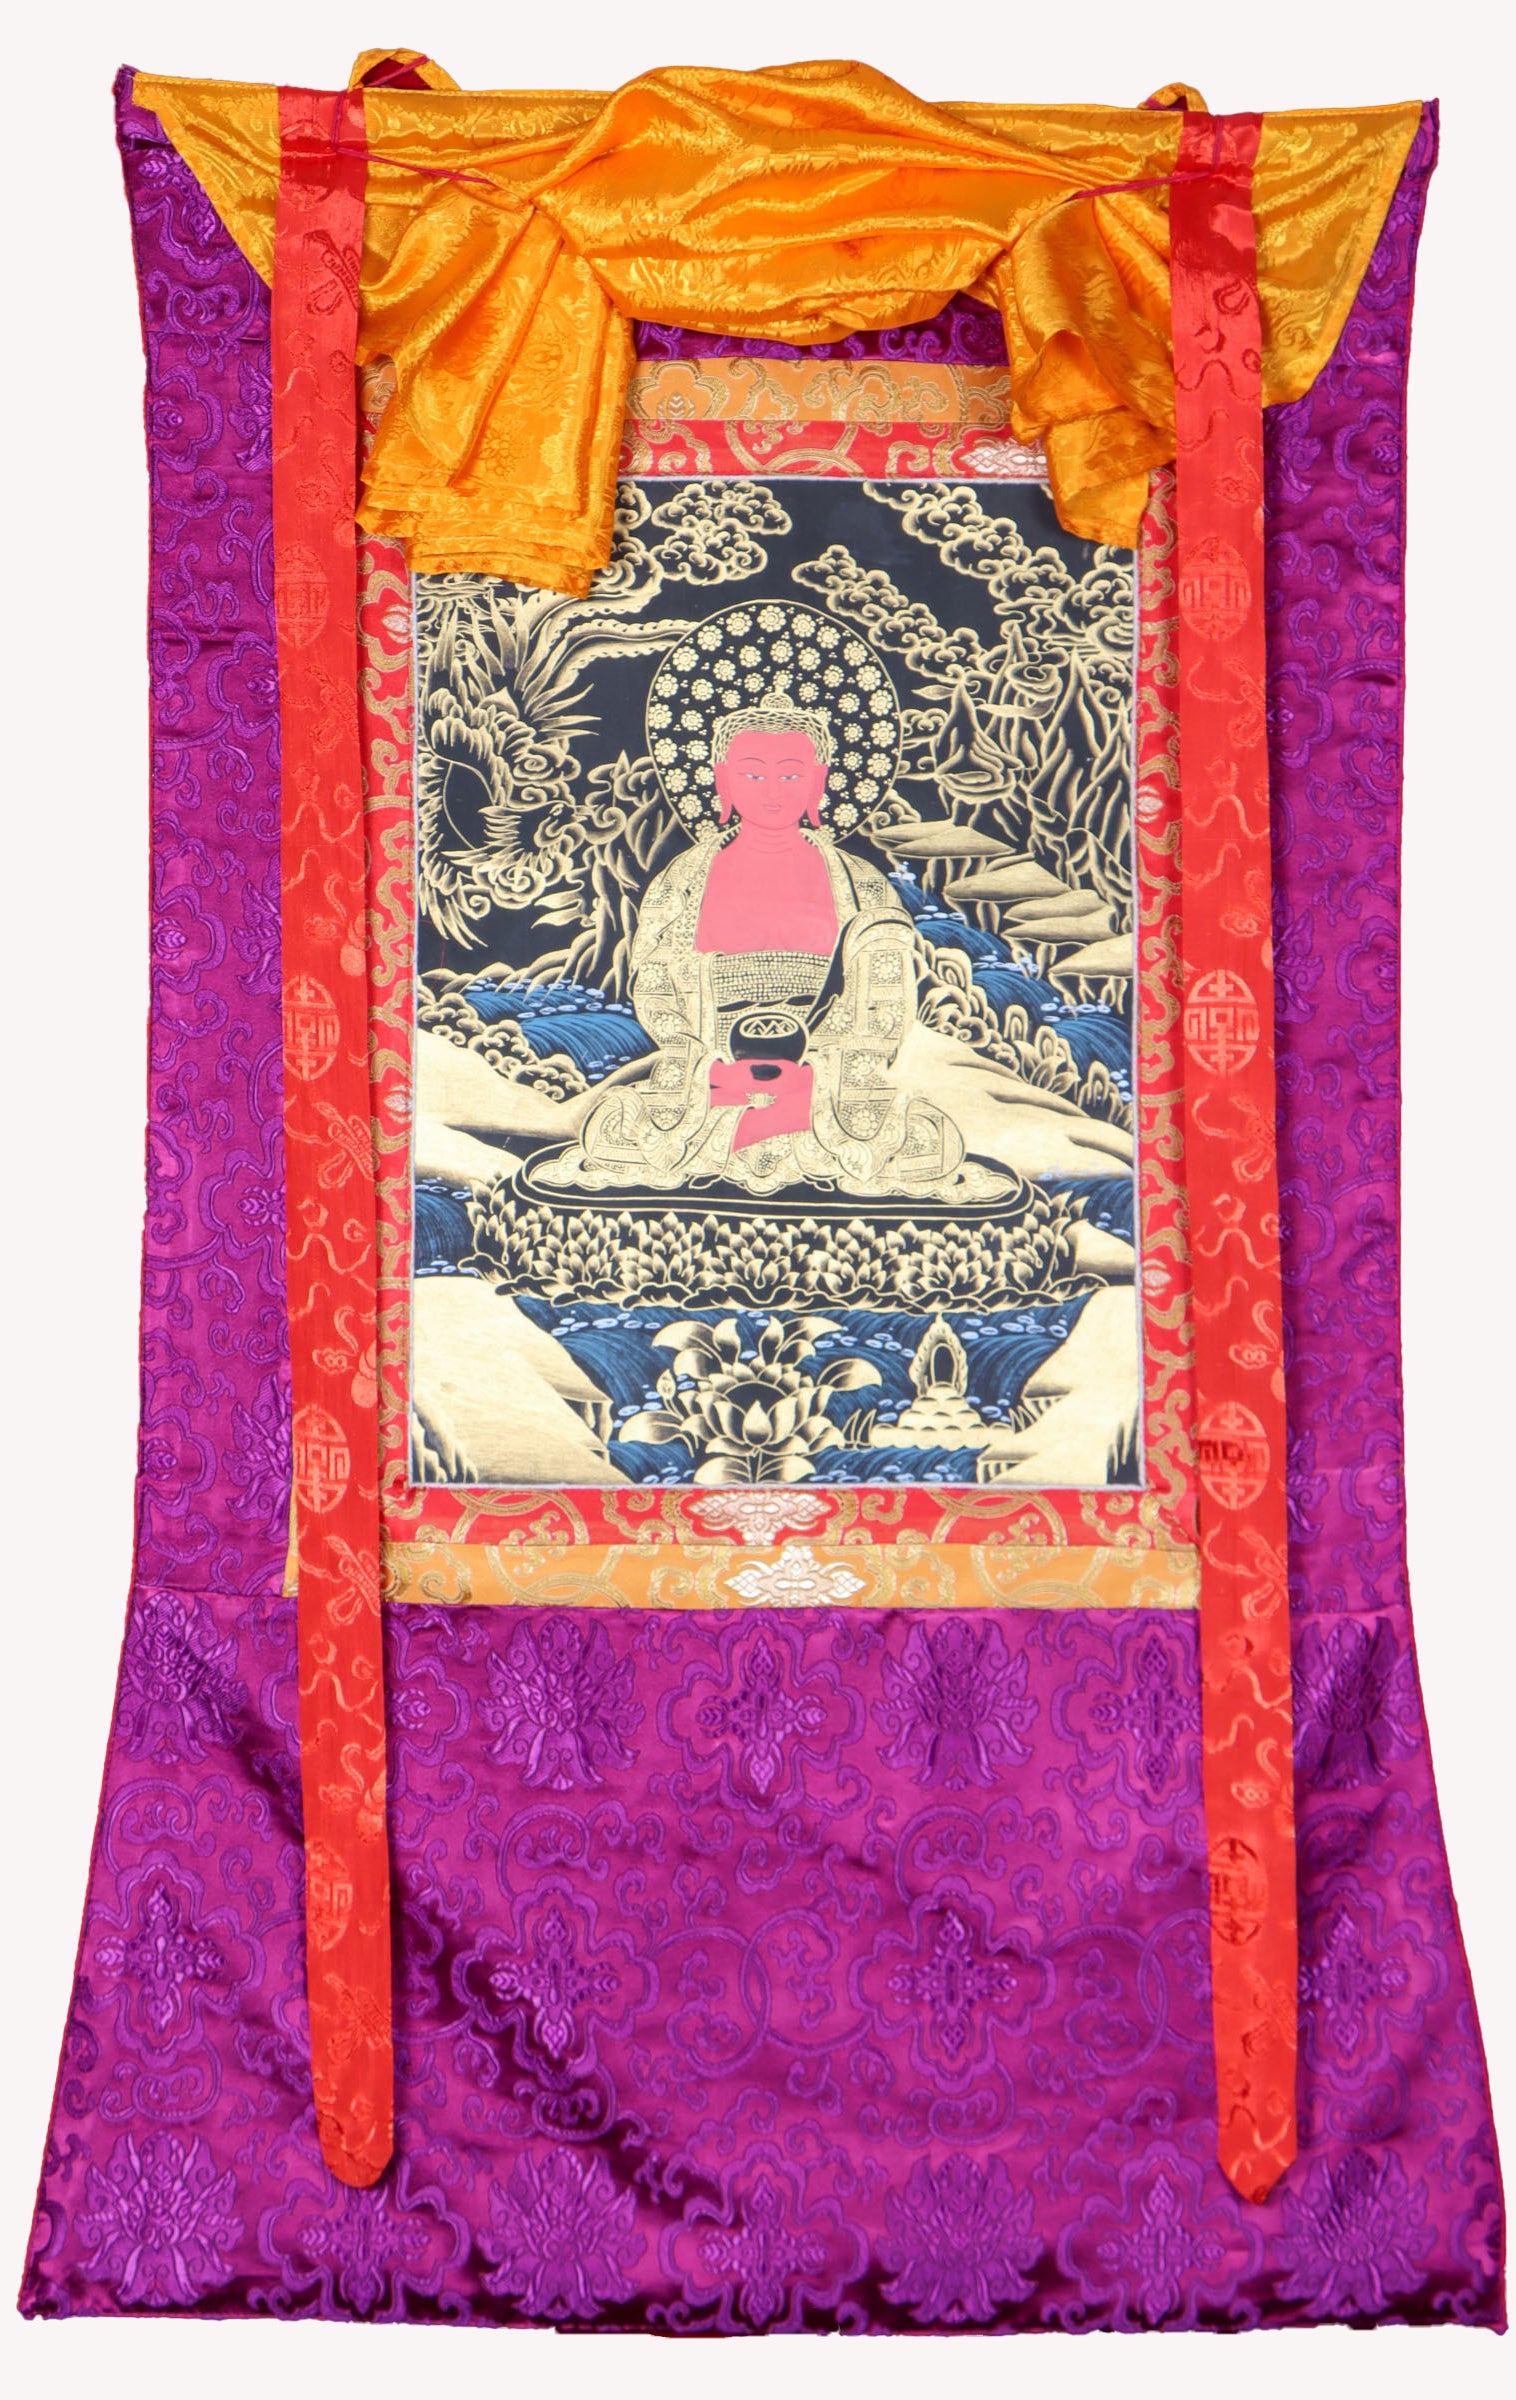 Amitabha Thangka Painting for prayer and devotion.